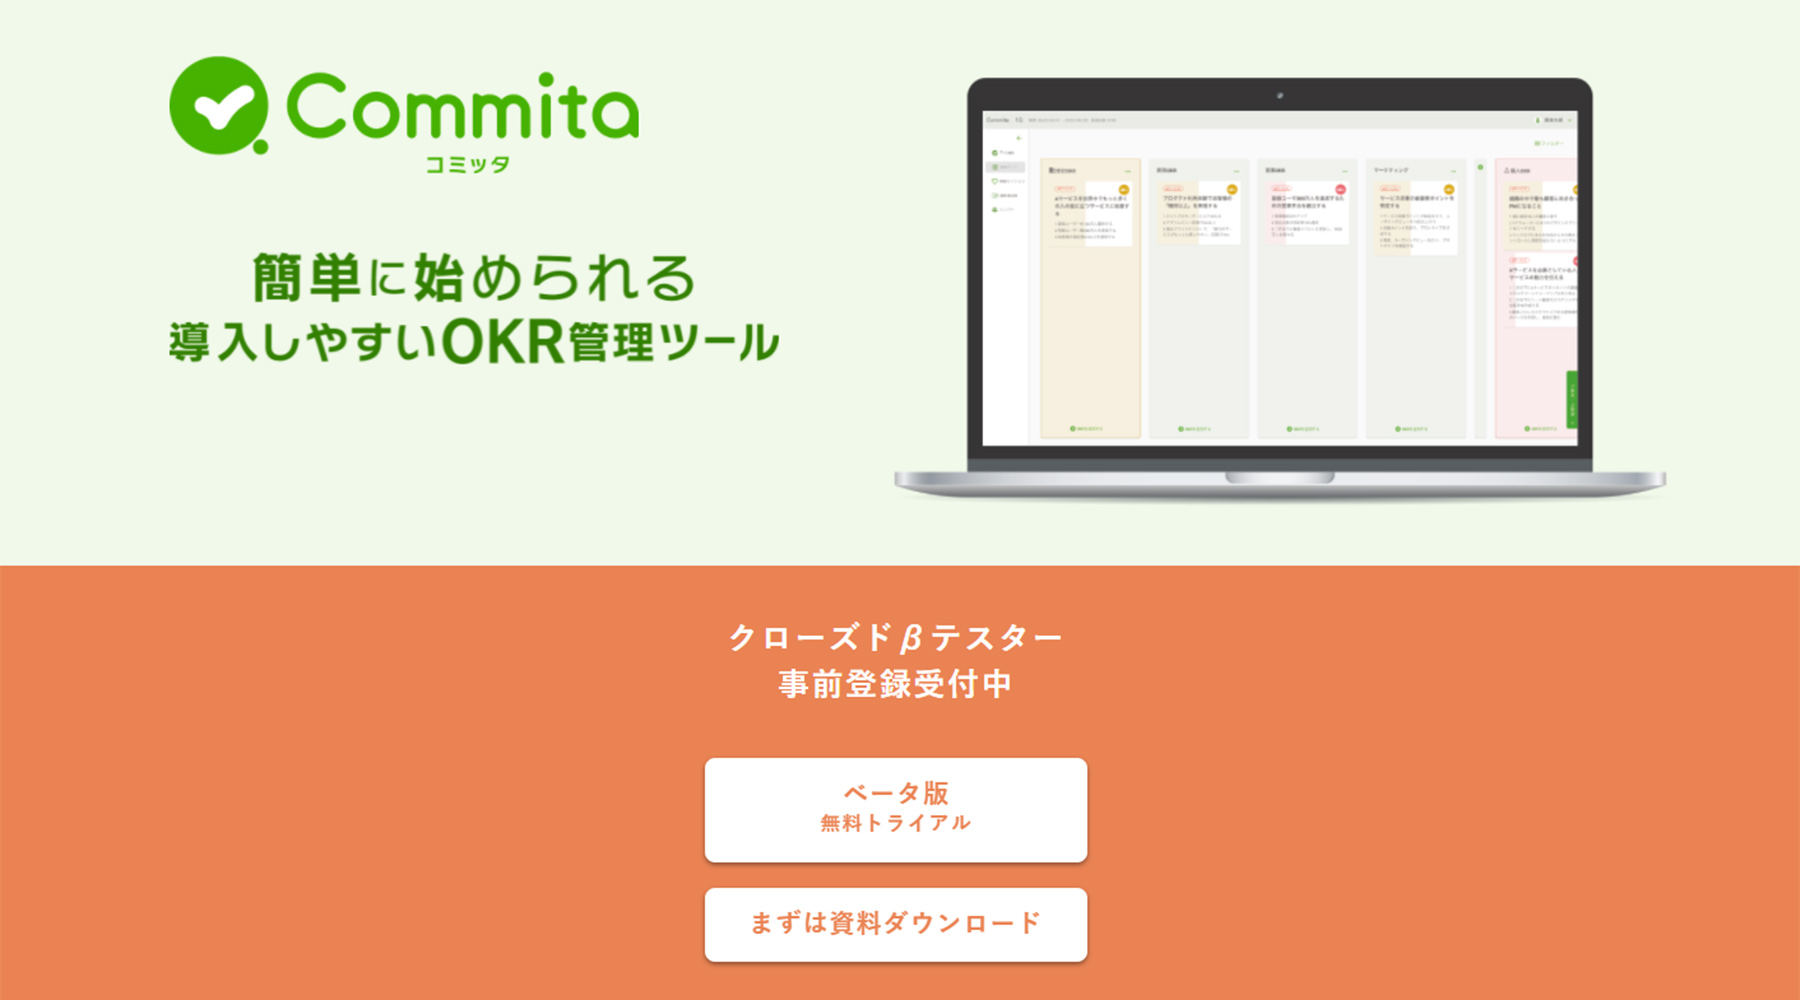 Commita公式Webサイト